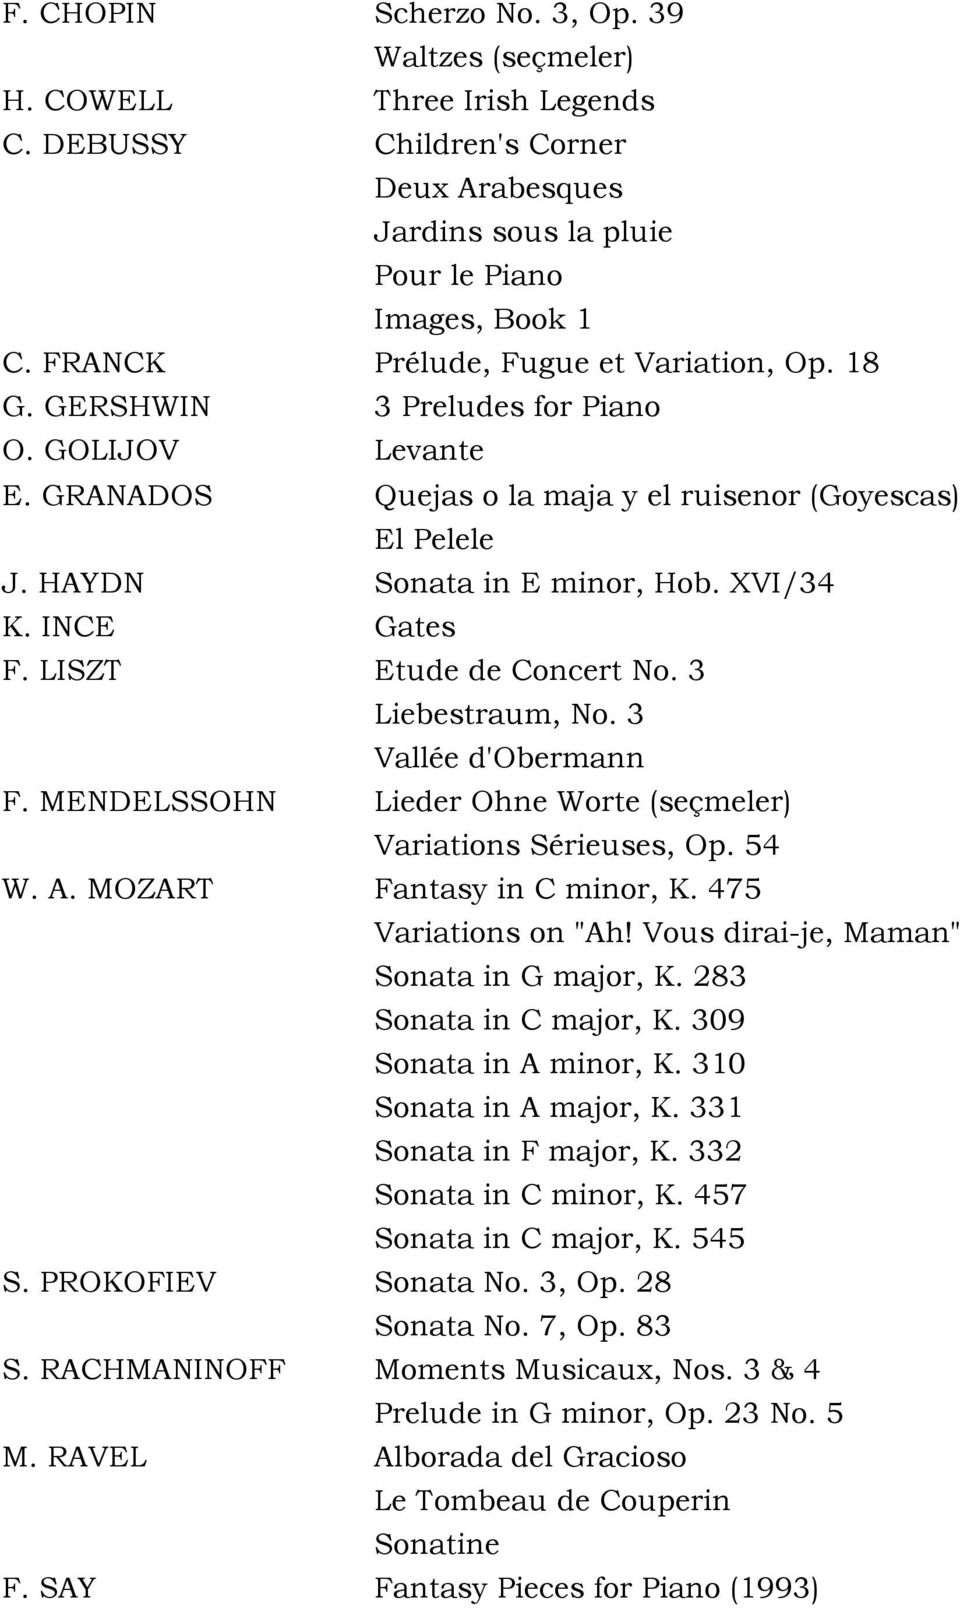 XVI/34 K. INCE Gates F. LISZT Etude de Concert No. 3 Liebestraum, No. 3 Vallée d'obermann F. MENDELSSOHN Lieder Ohne Worte (seçmeler) Variations Sérieuses, Op. 54 W. A. MOZART Fantasy in C minor, K.